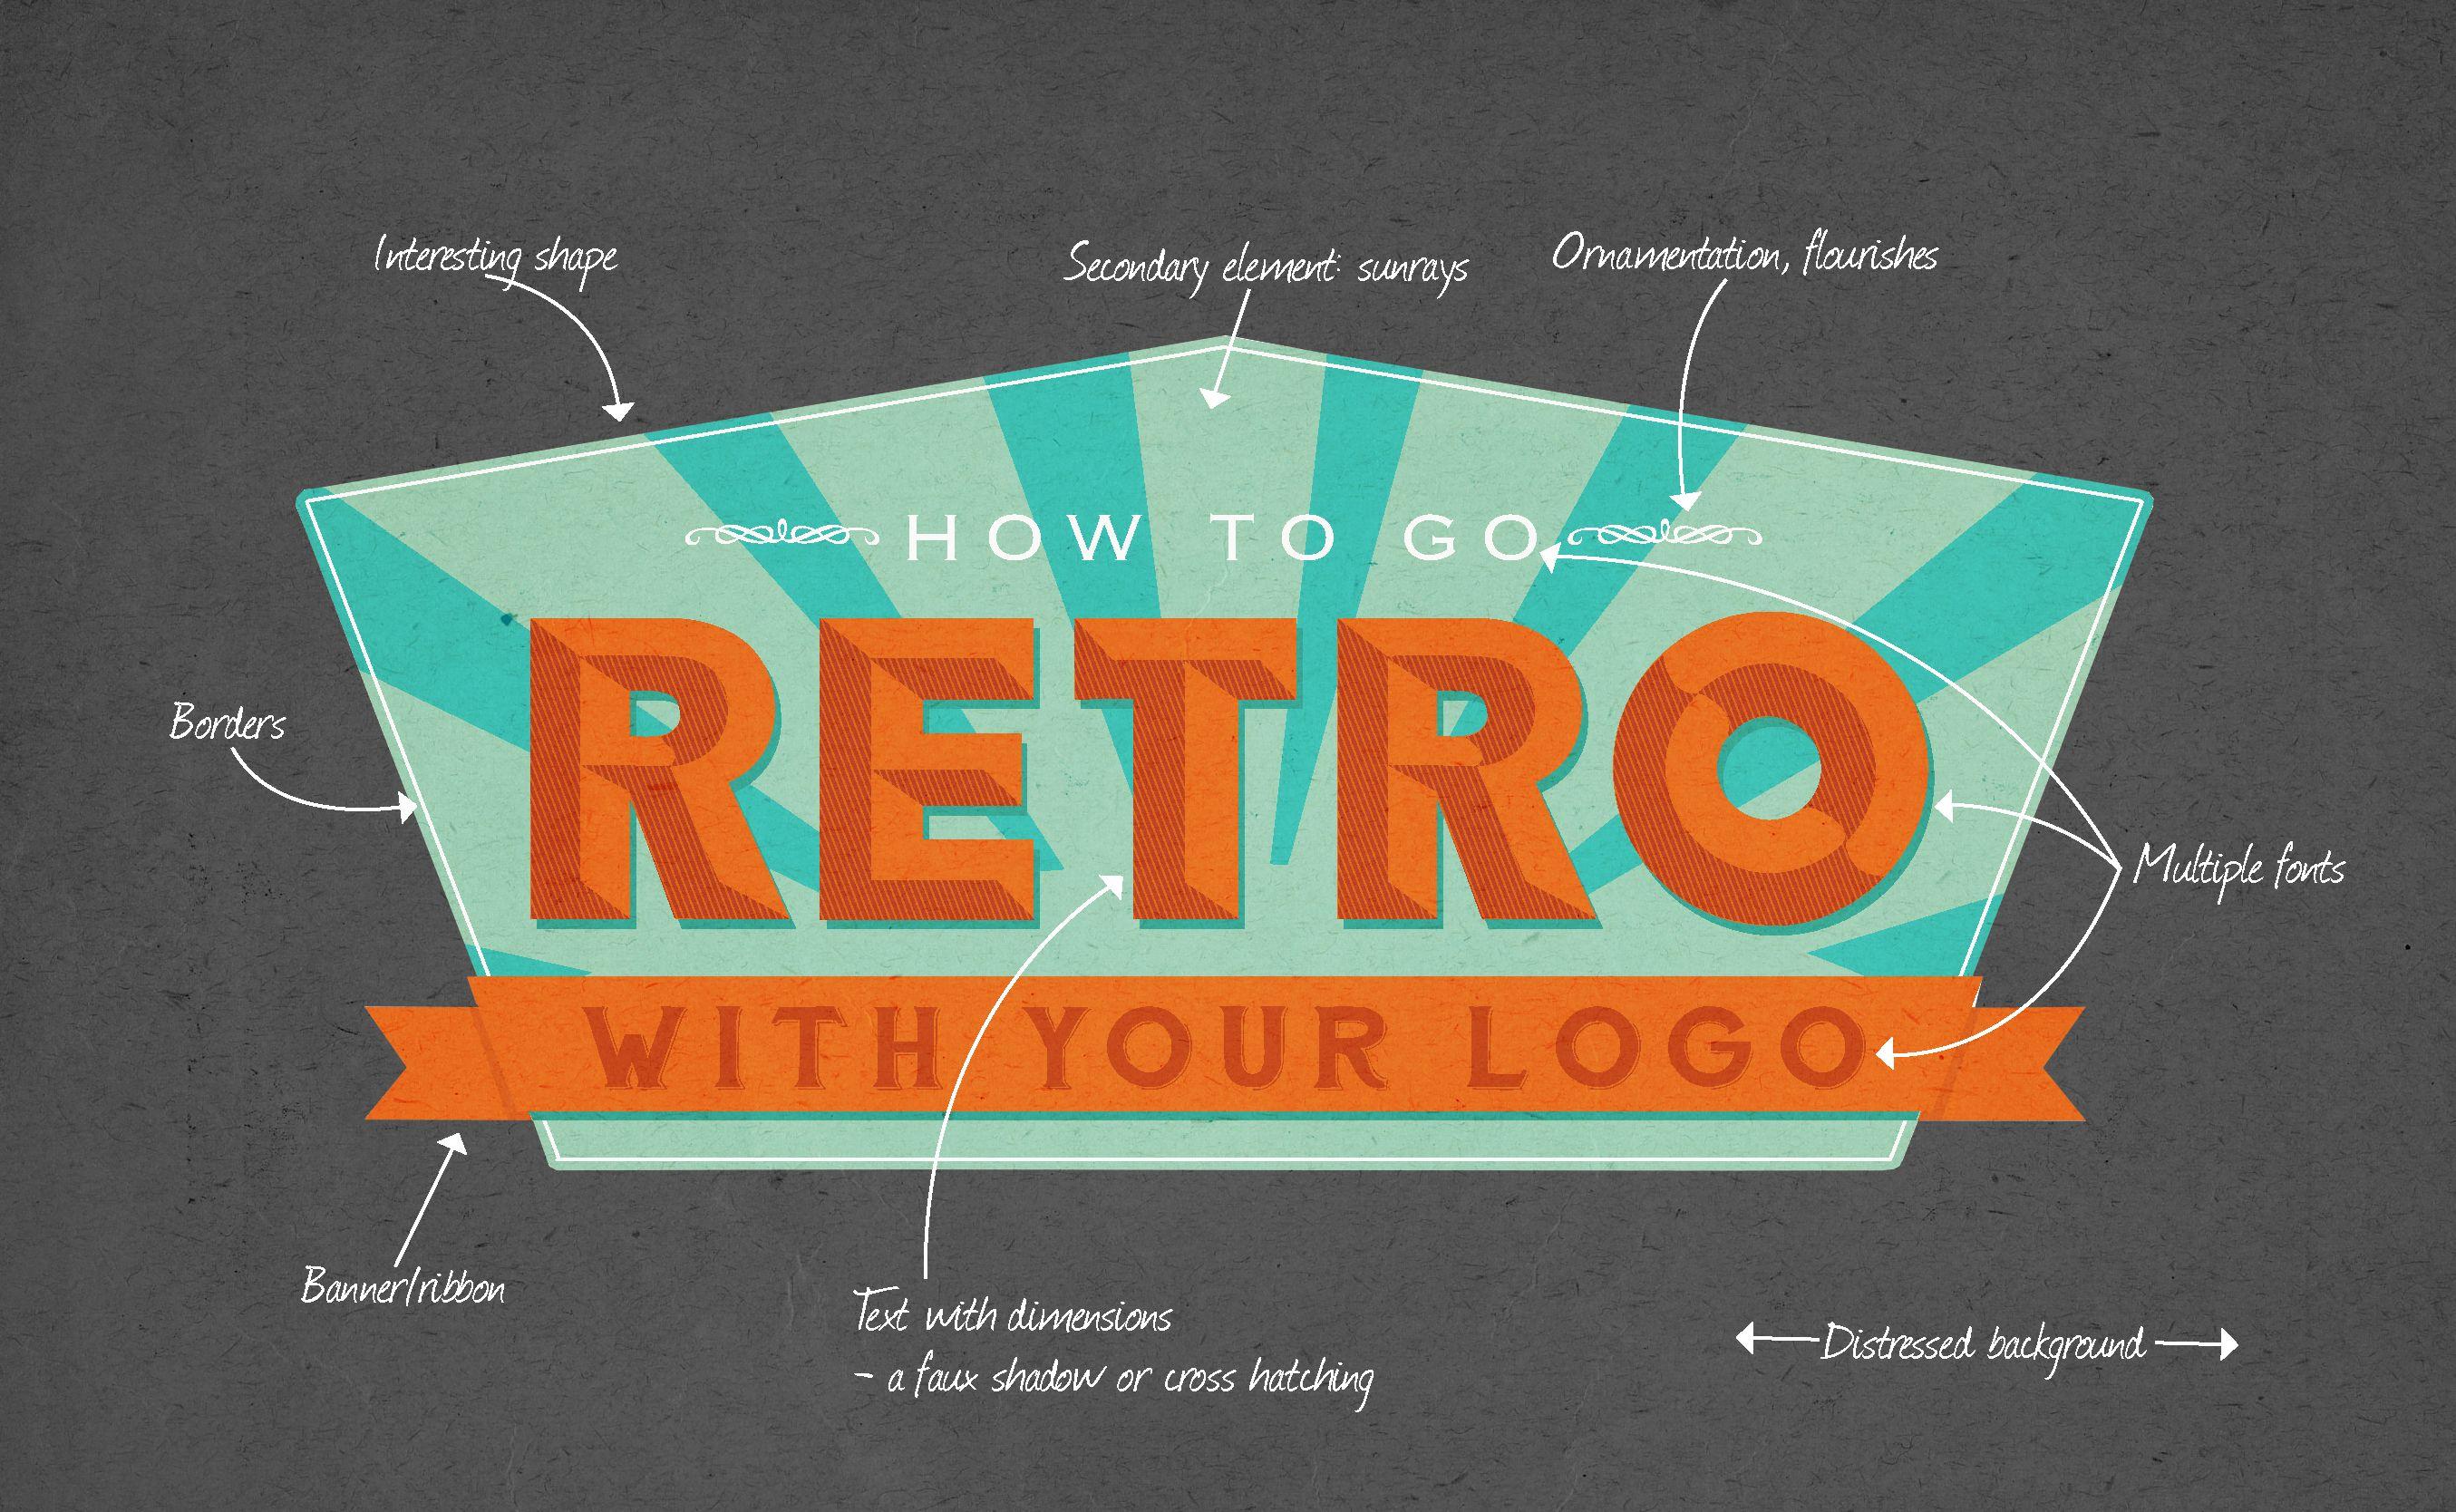 Retro Company Logo - Returning to retro with your logo